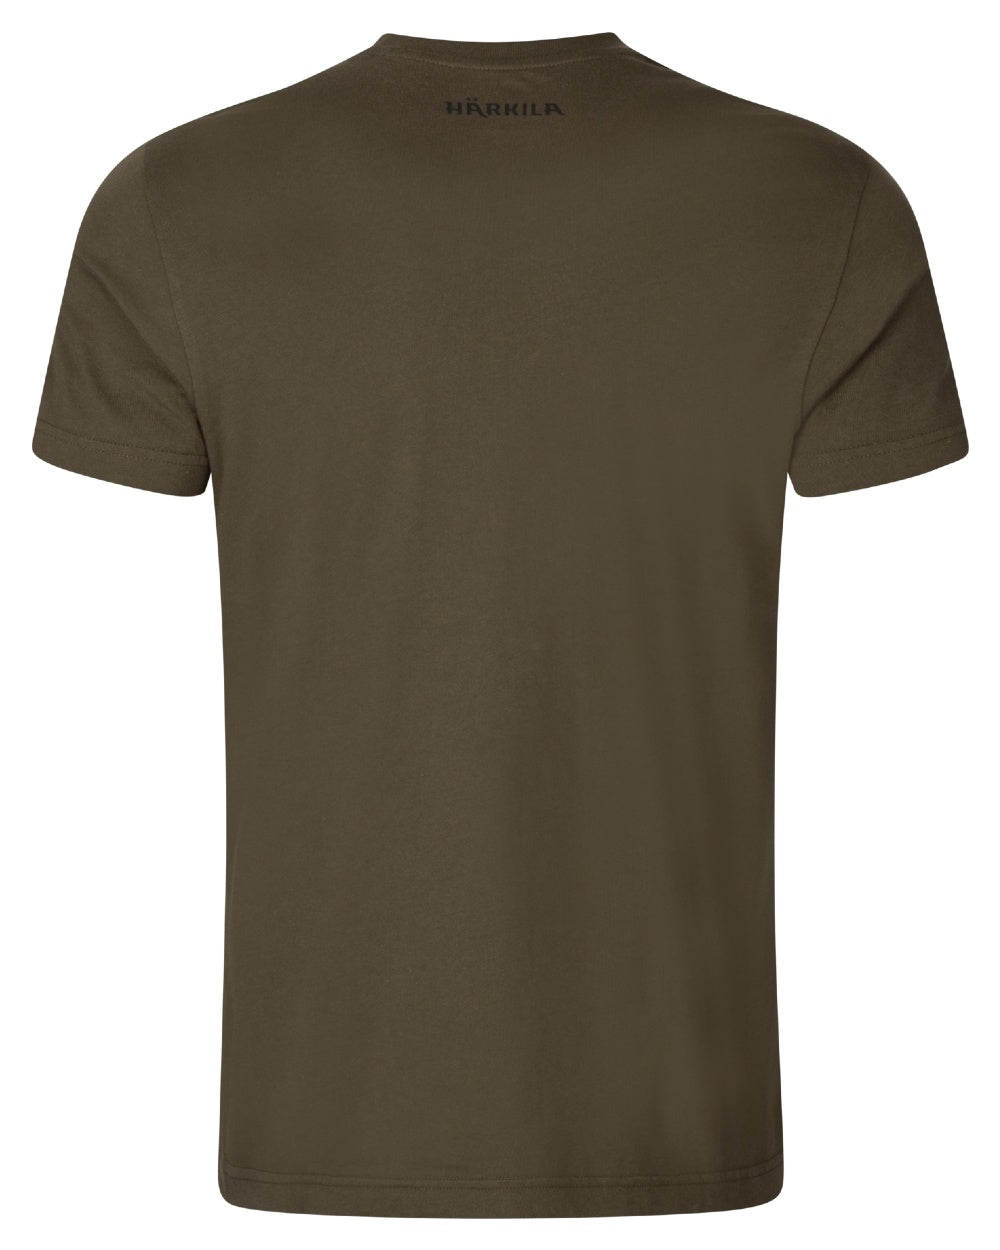 Willow Green coloured Harkila Impact Short Sleeve T-Shirt on white background 